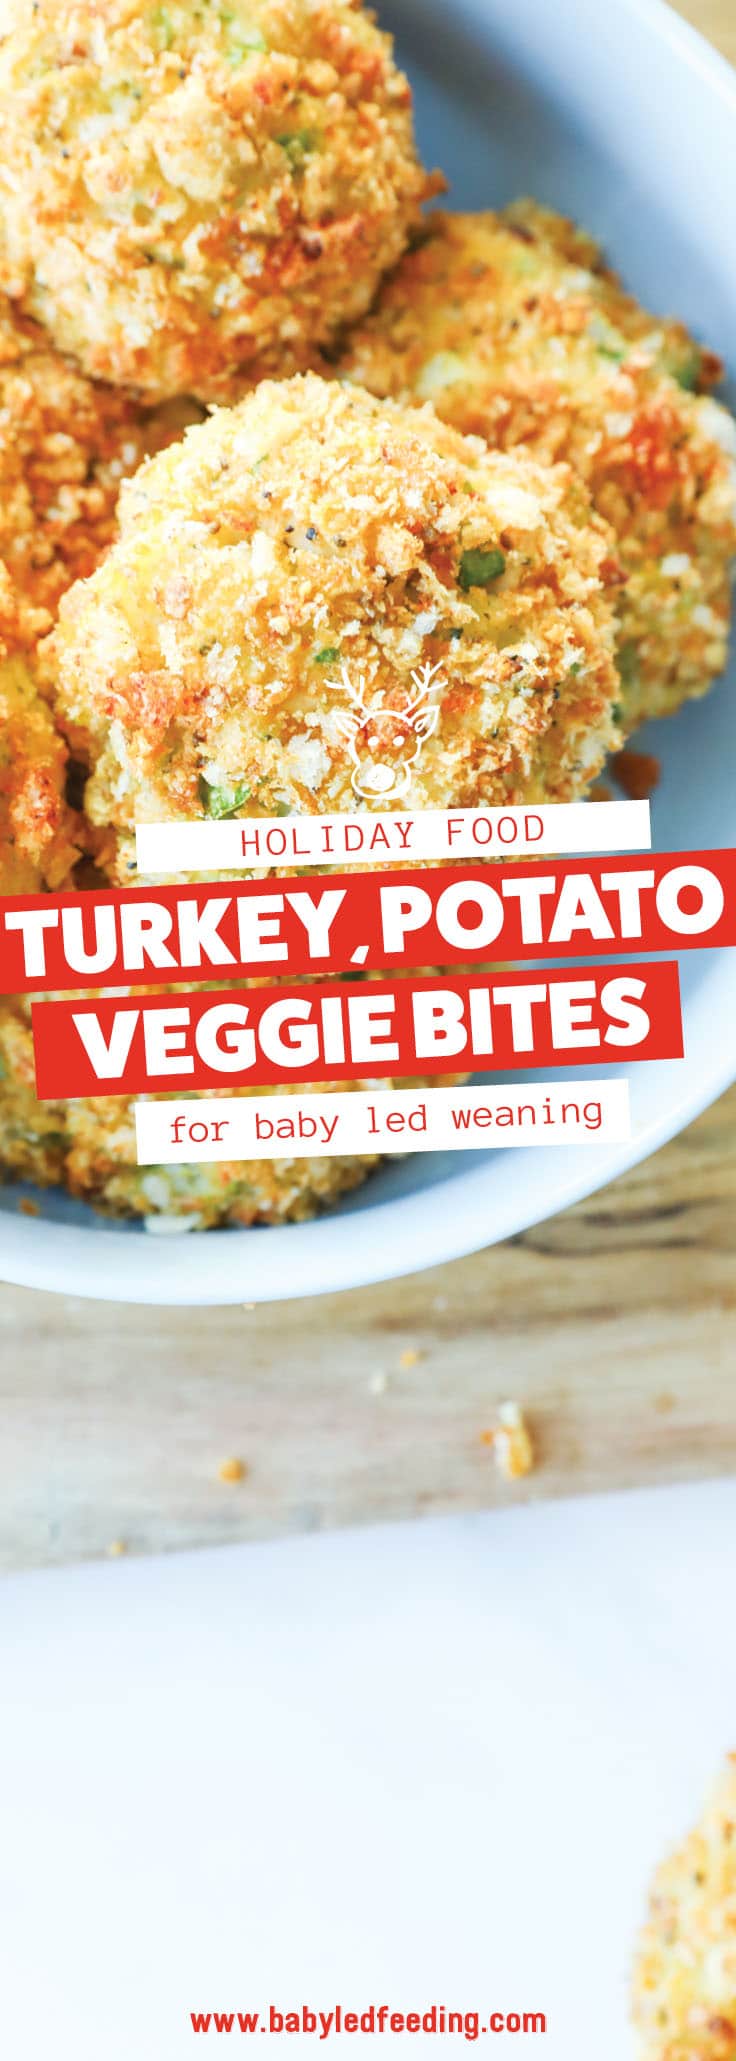 Baby Led Feeding Turkey and Potato Bites Pinterest